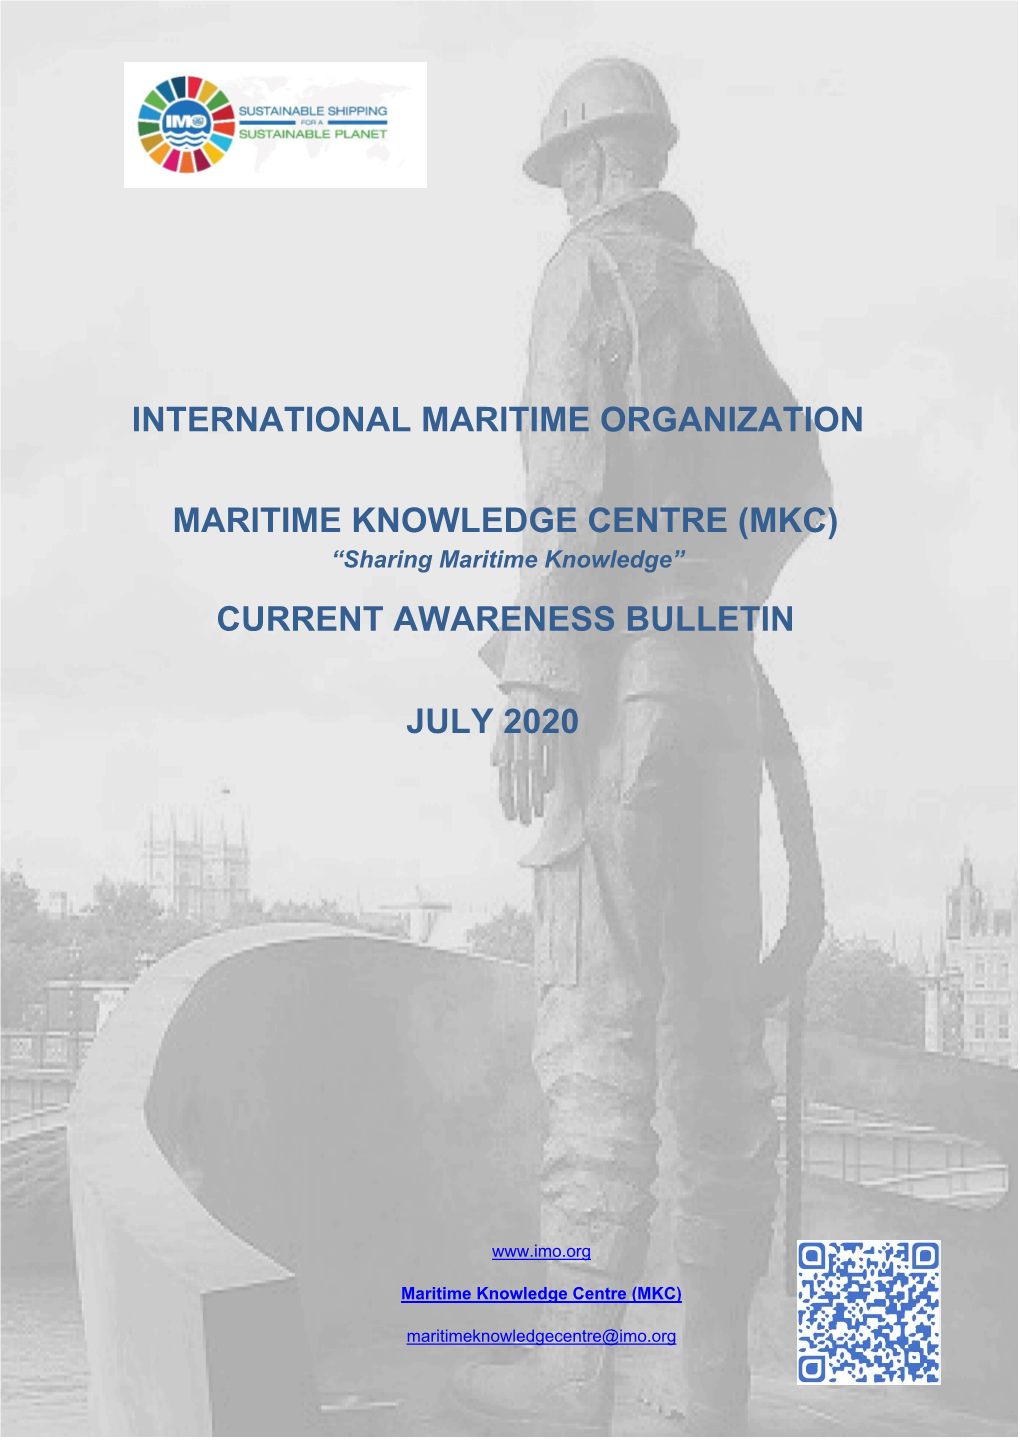 International Maritime Organization Maritime Knowledge Centre (Mkc) Current Awareness Bulletin July 2020